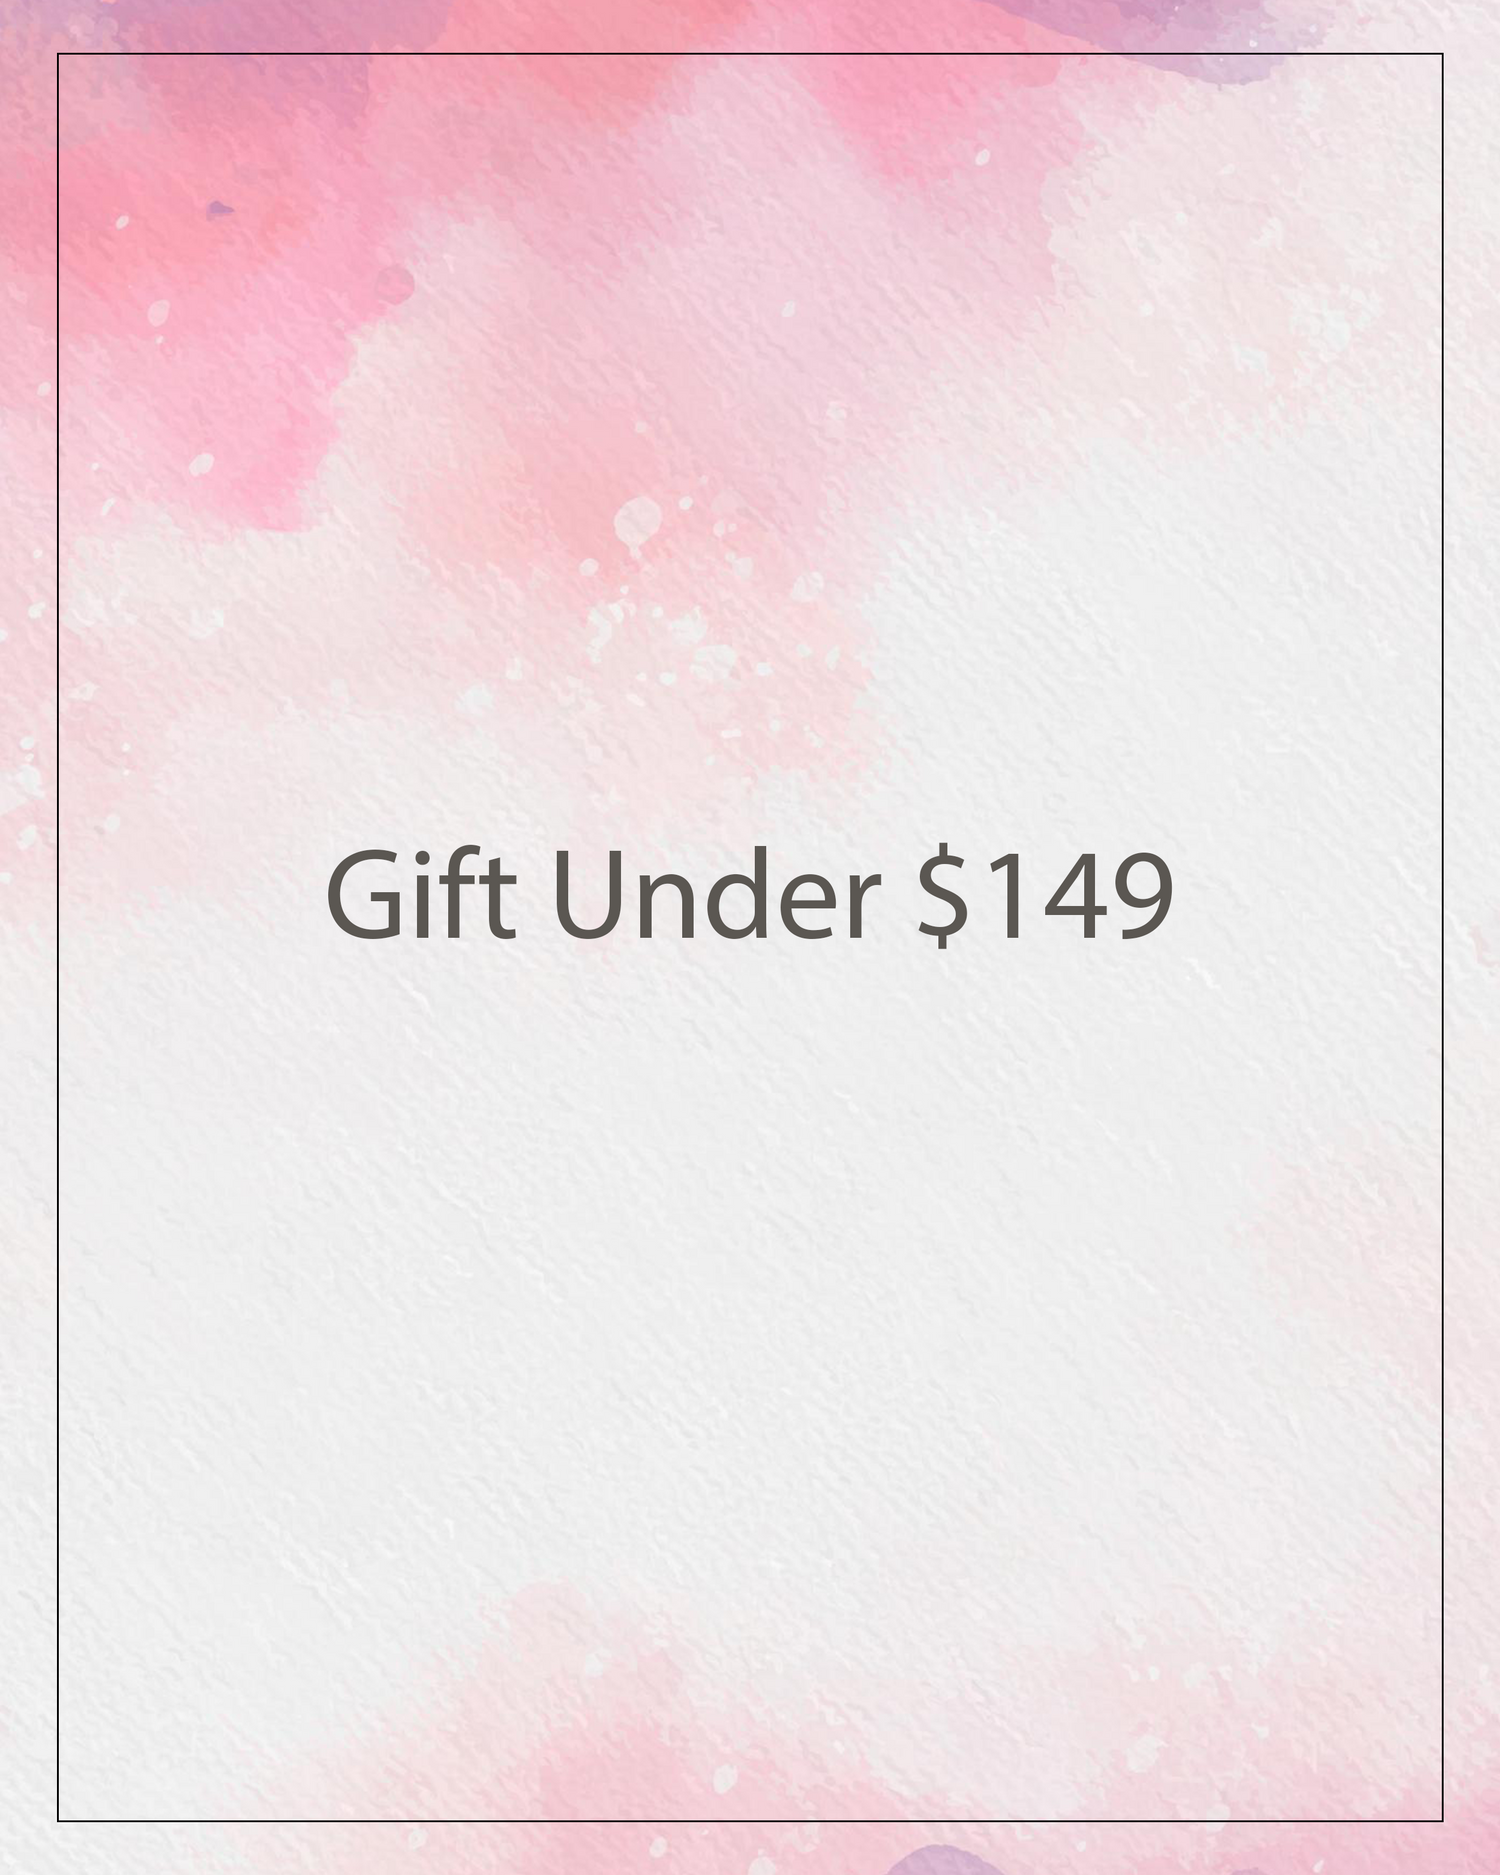 Gifts Under $149